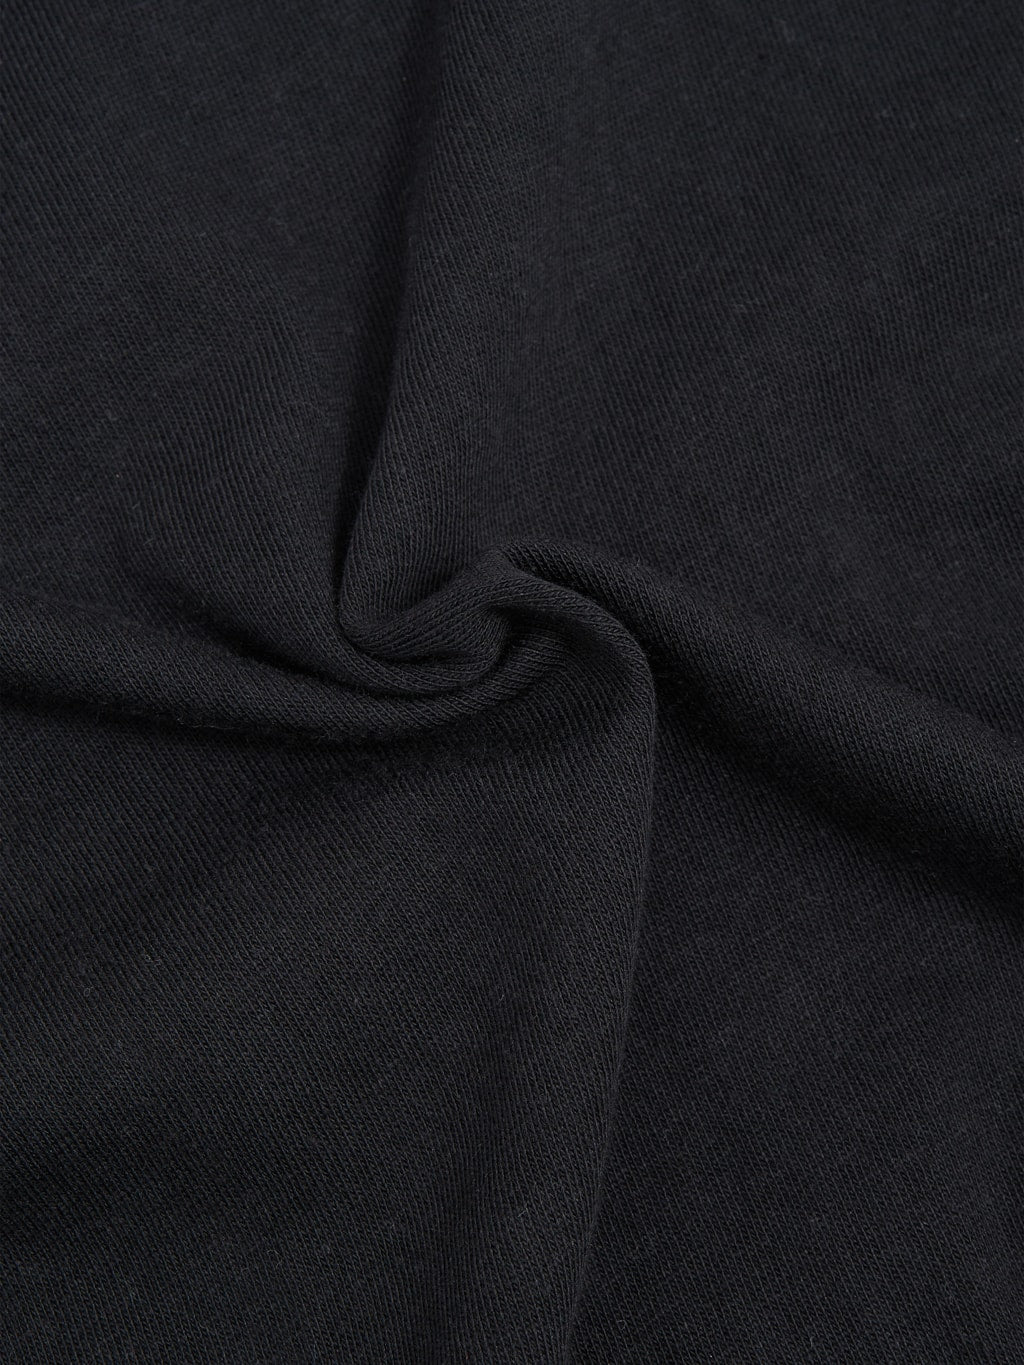 Merz b Schwanen 114 Loopwheeled TShirt black classic fit  texture